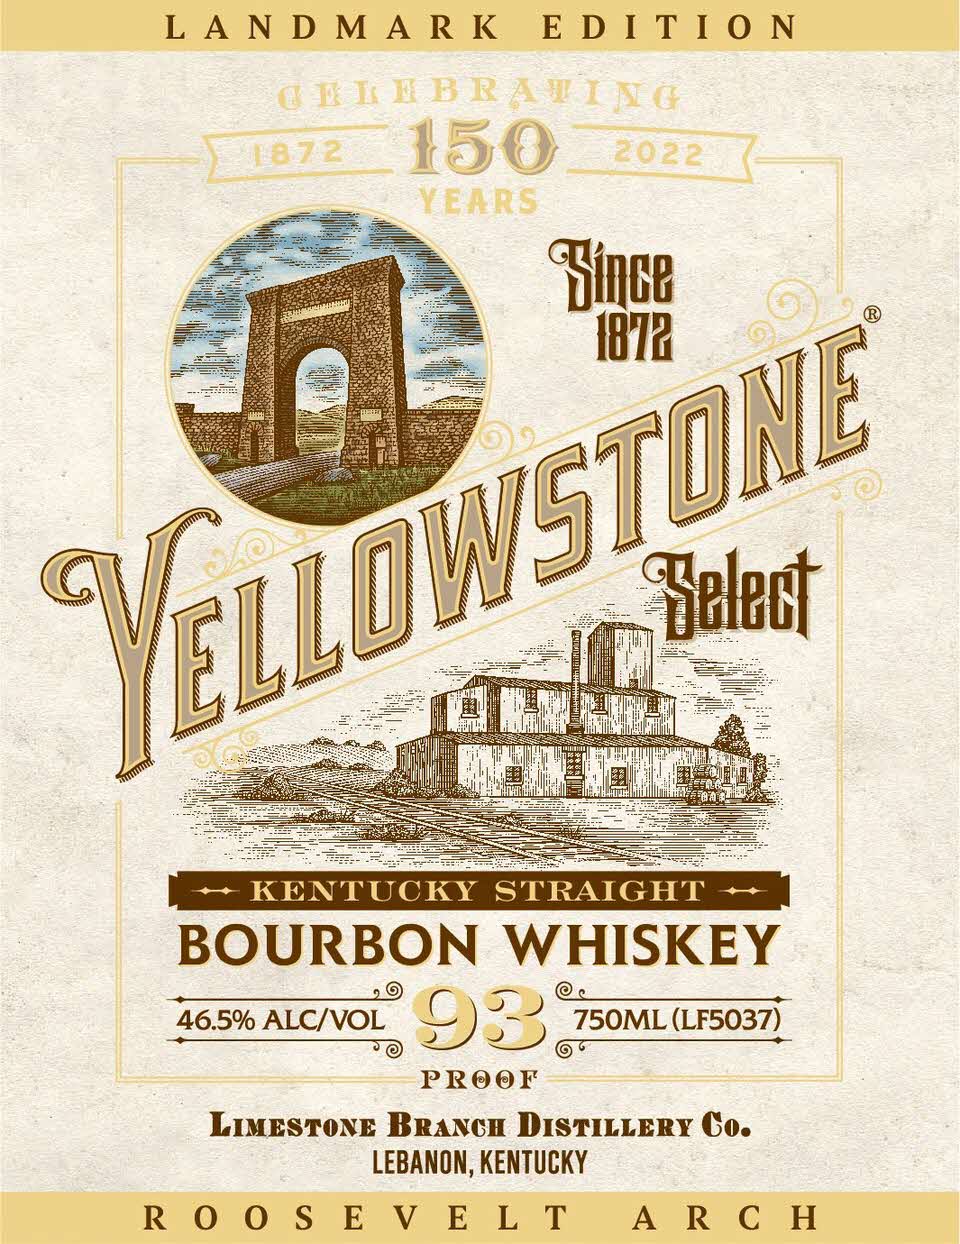 Limestone Branch Distillery - 5 Yellowstone Select Kentucky Straight Bourbon Whiskey, 150 Year Celebration, Roosevelt Arch Label